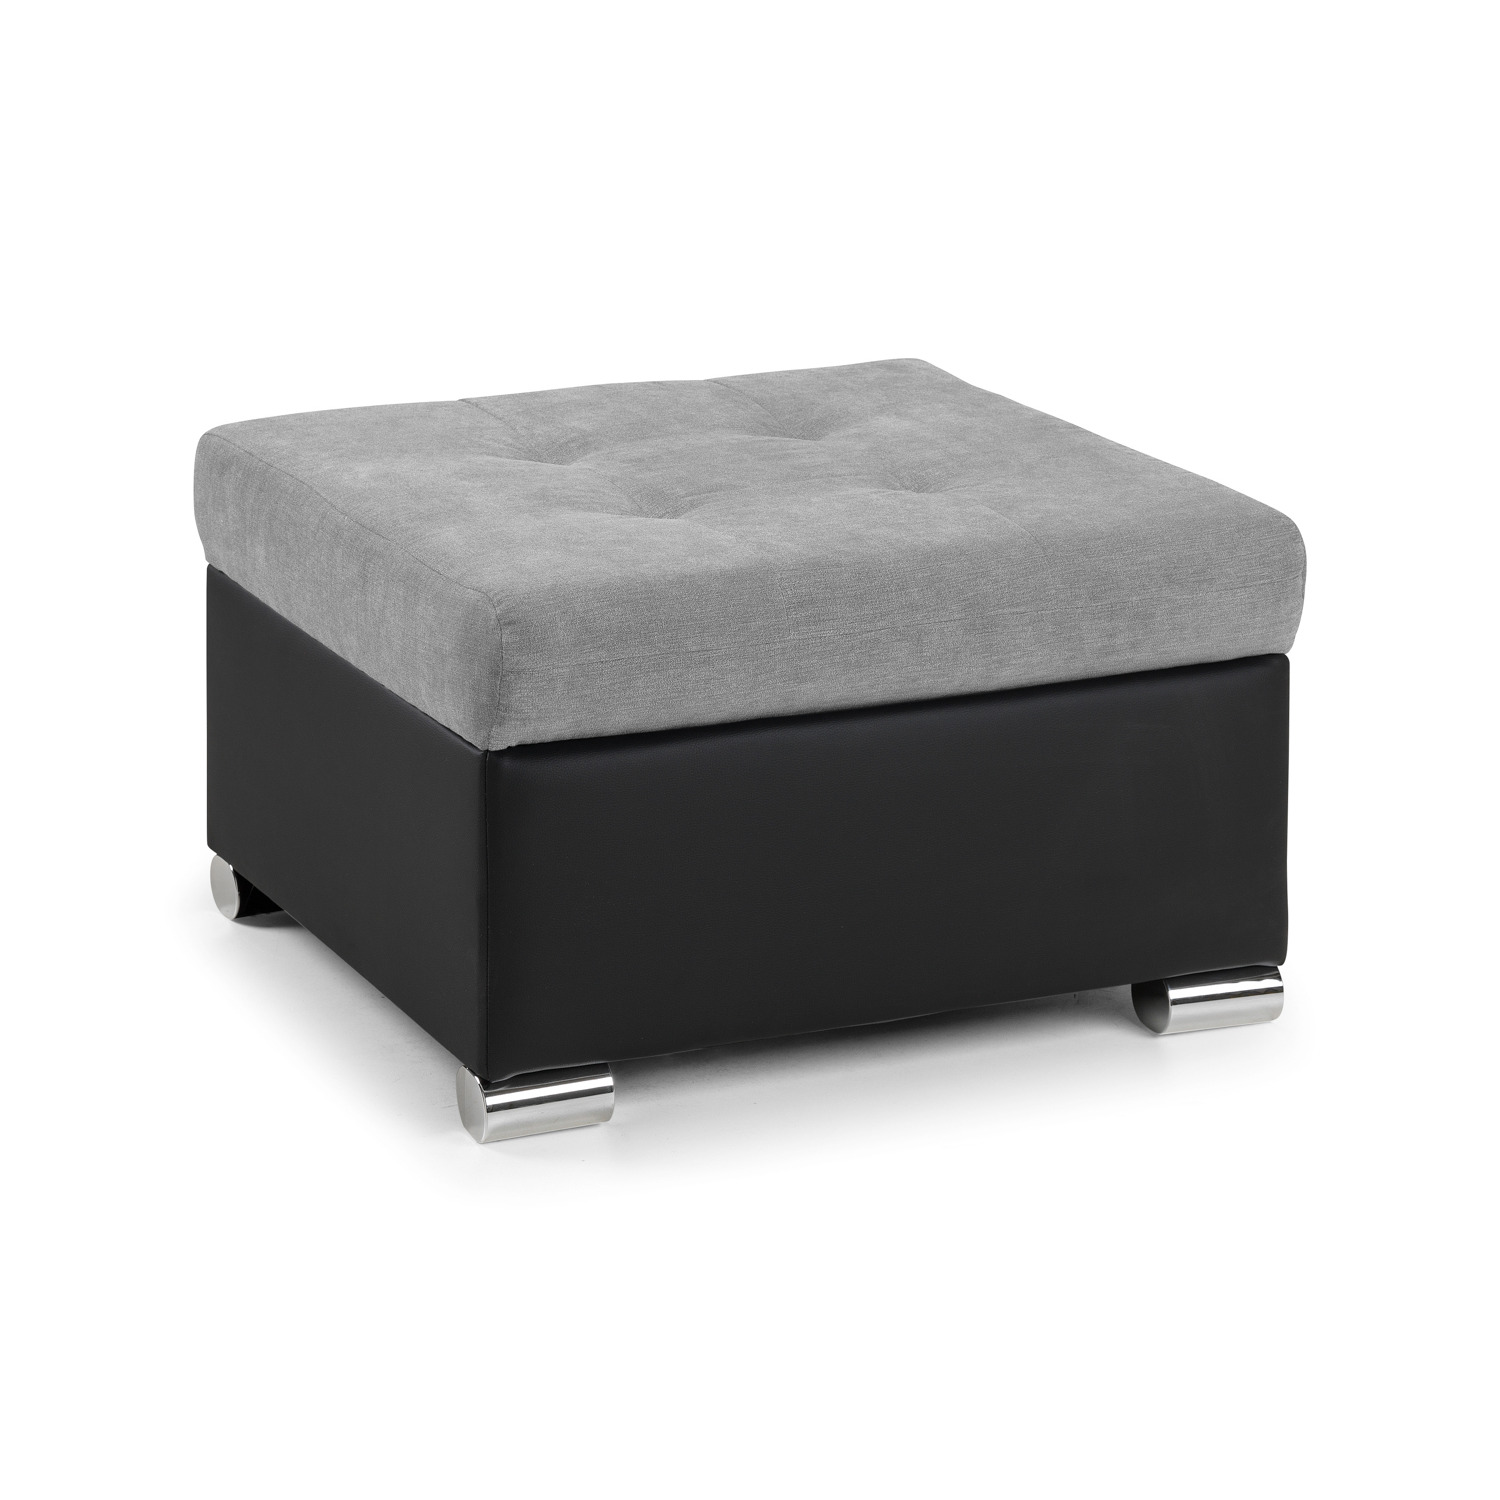 Malvi Sofabed Black/Grey Footstool - image 1